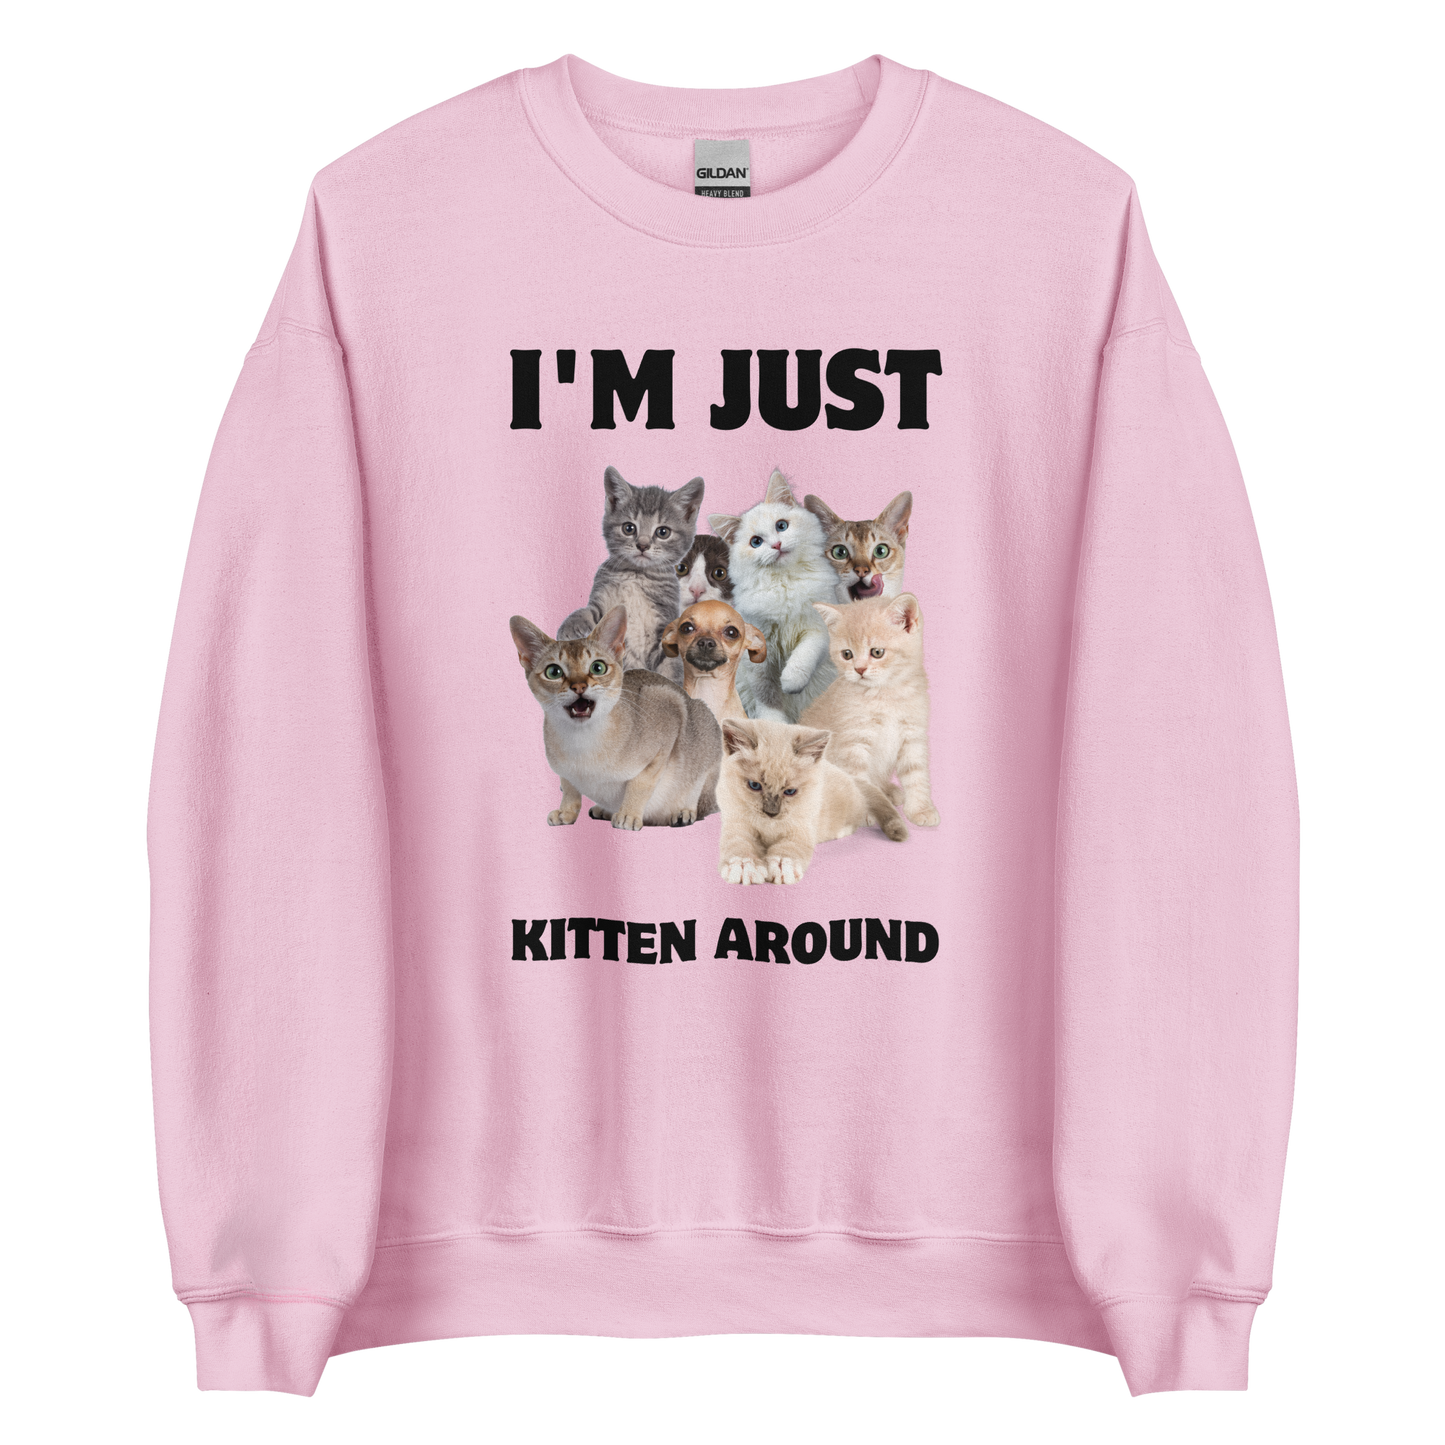 Light Pink Cat Sweatshirt featuring an I'm Just Kitten Around graphic on the chest - Funny Graphic Cat Sweatshirts - Boozy Fox